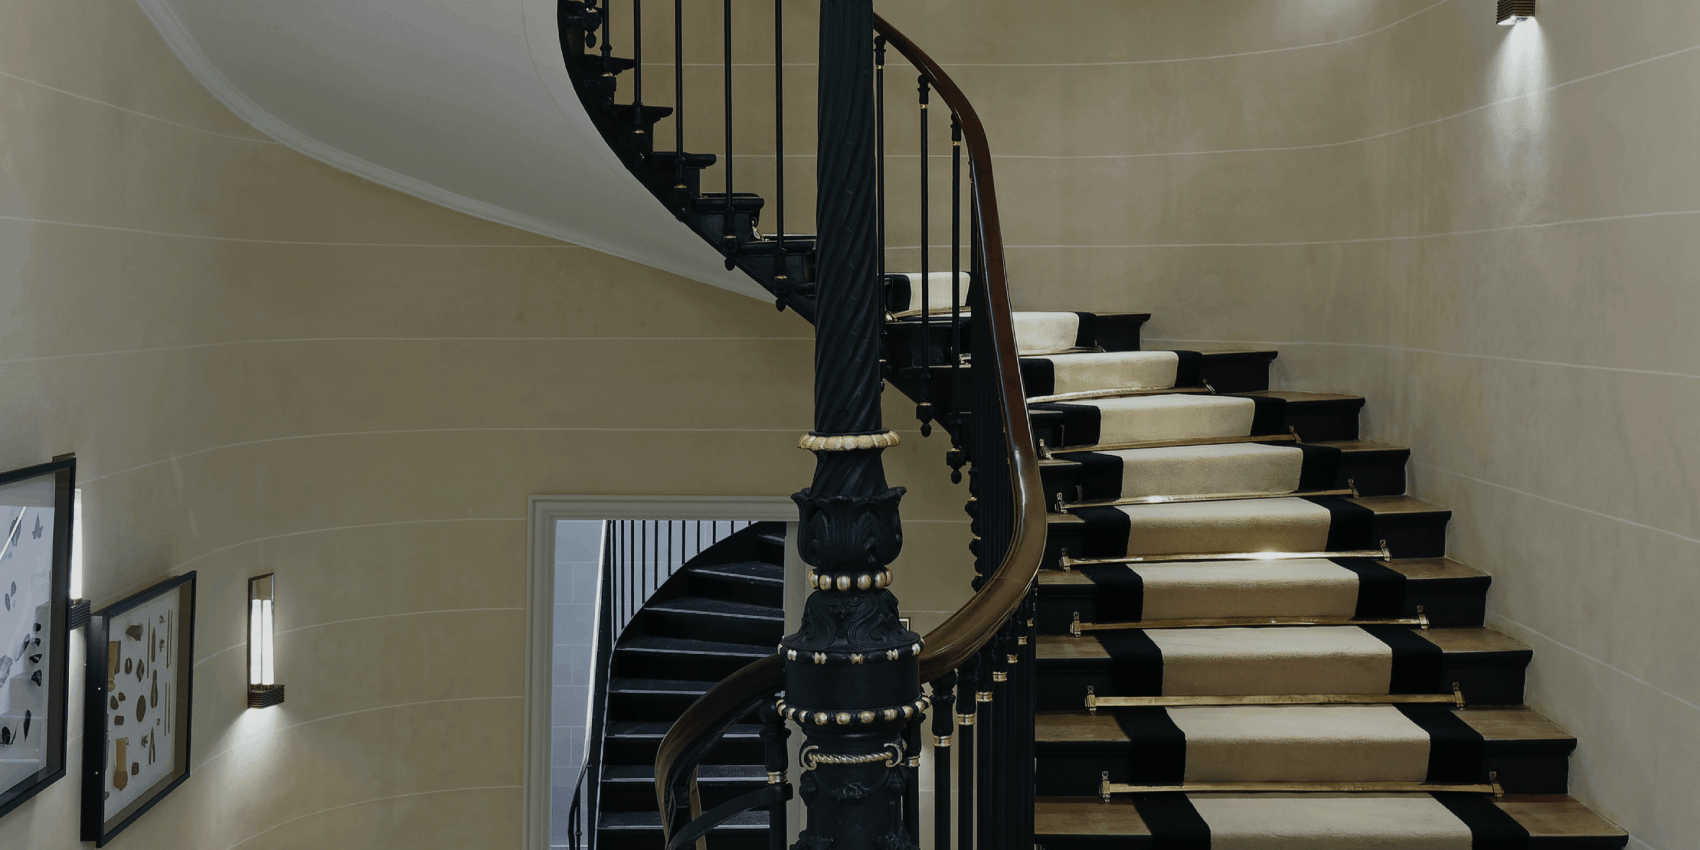 The escalier d’honneur (The Grand Staircase)